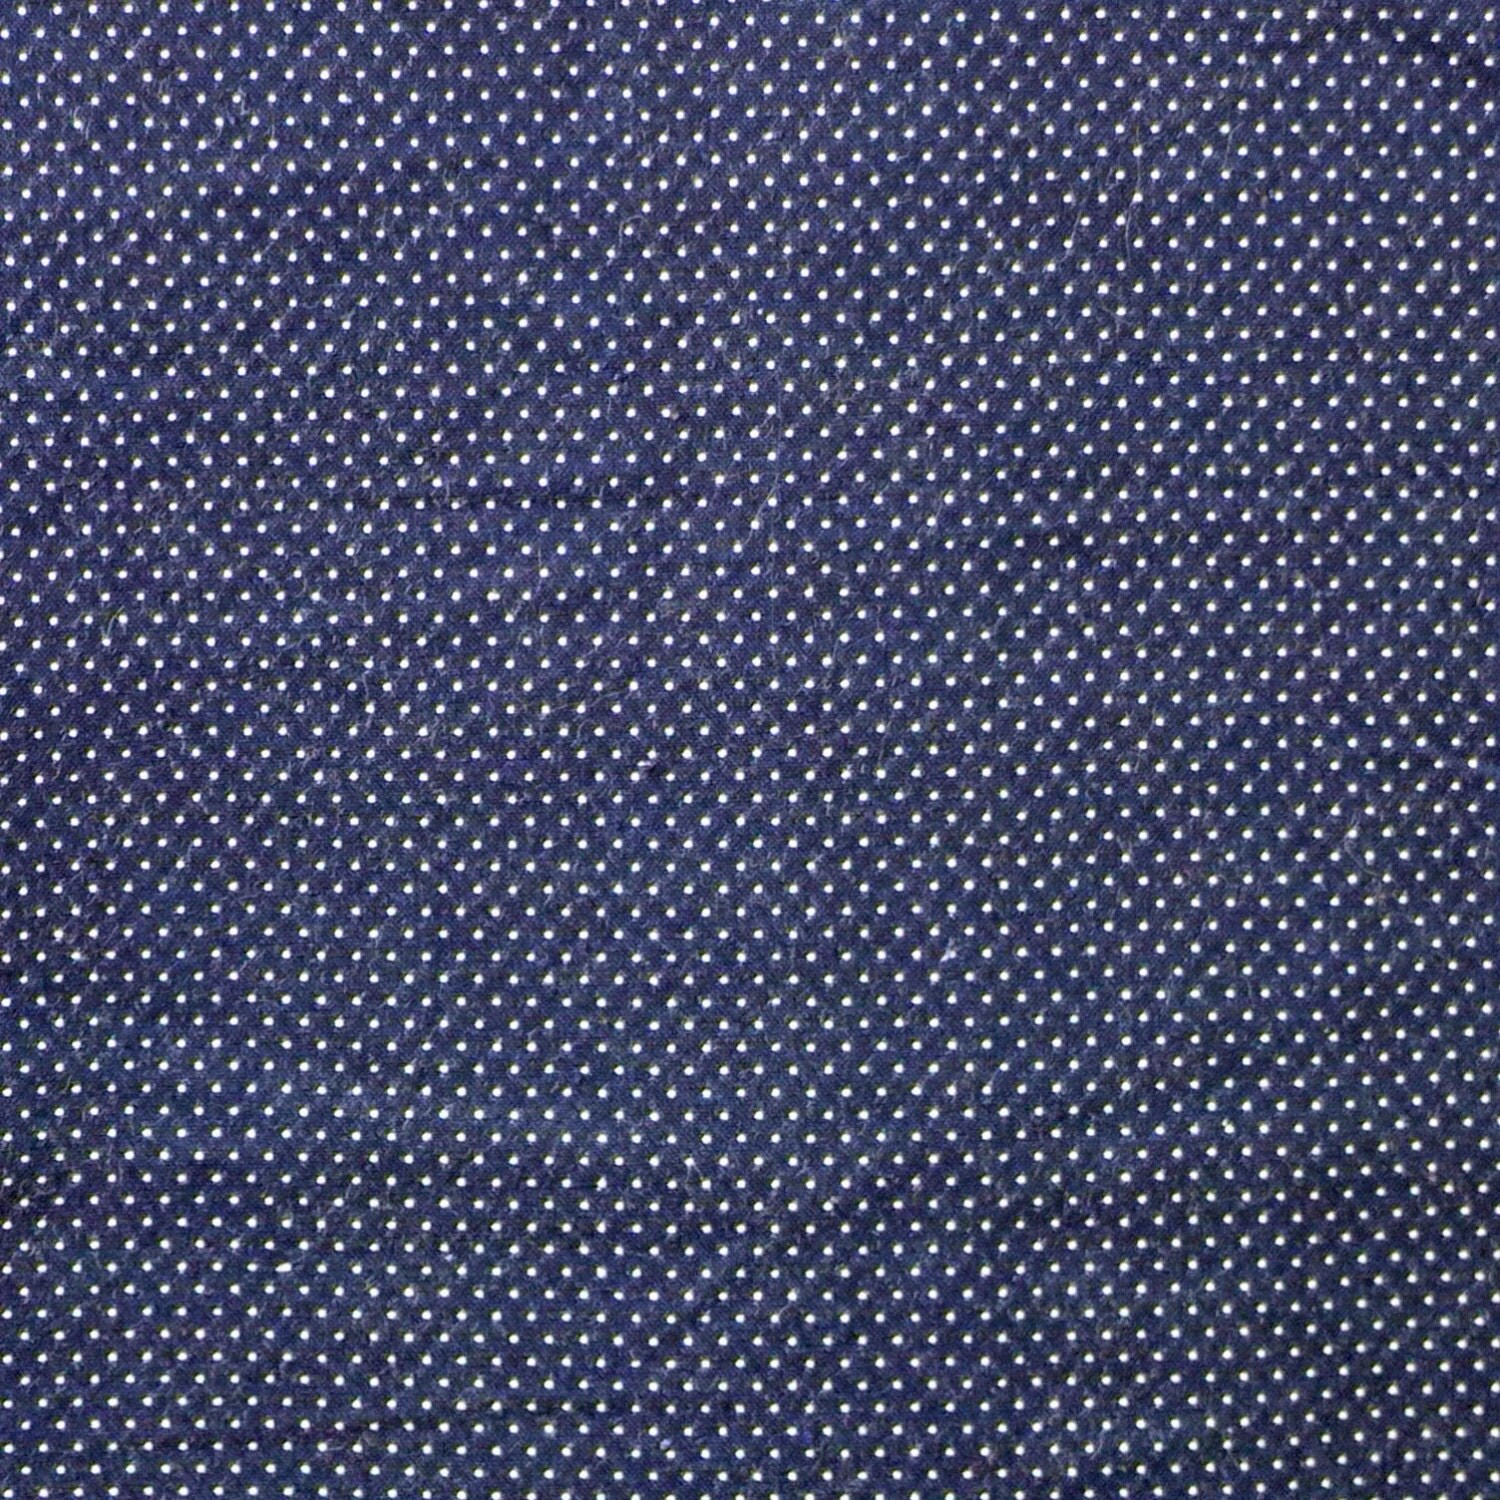 Dark Blue White Polka Dot Print Quilting by DartingDogFabric